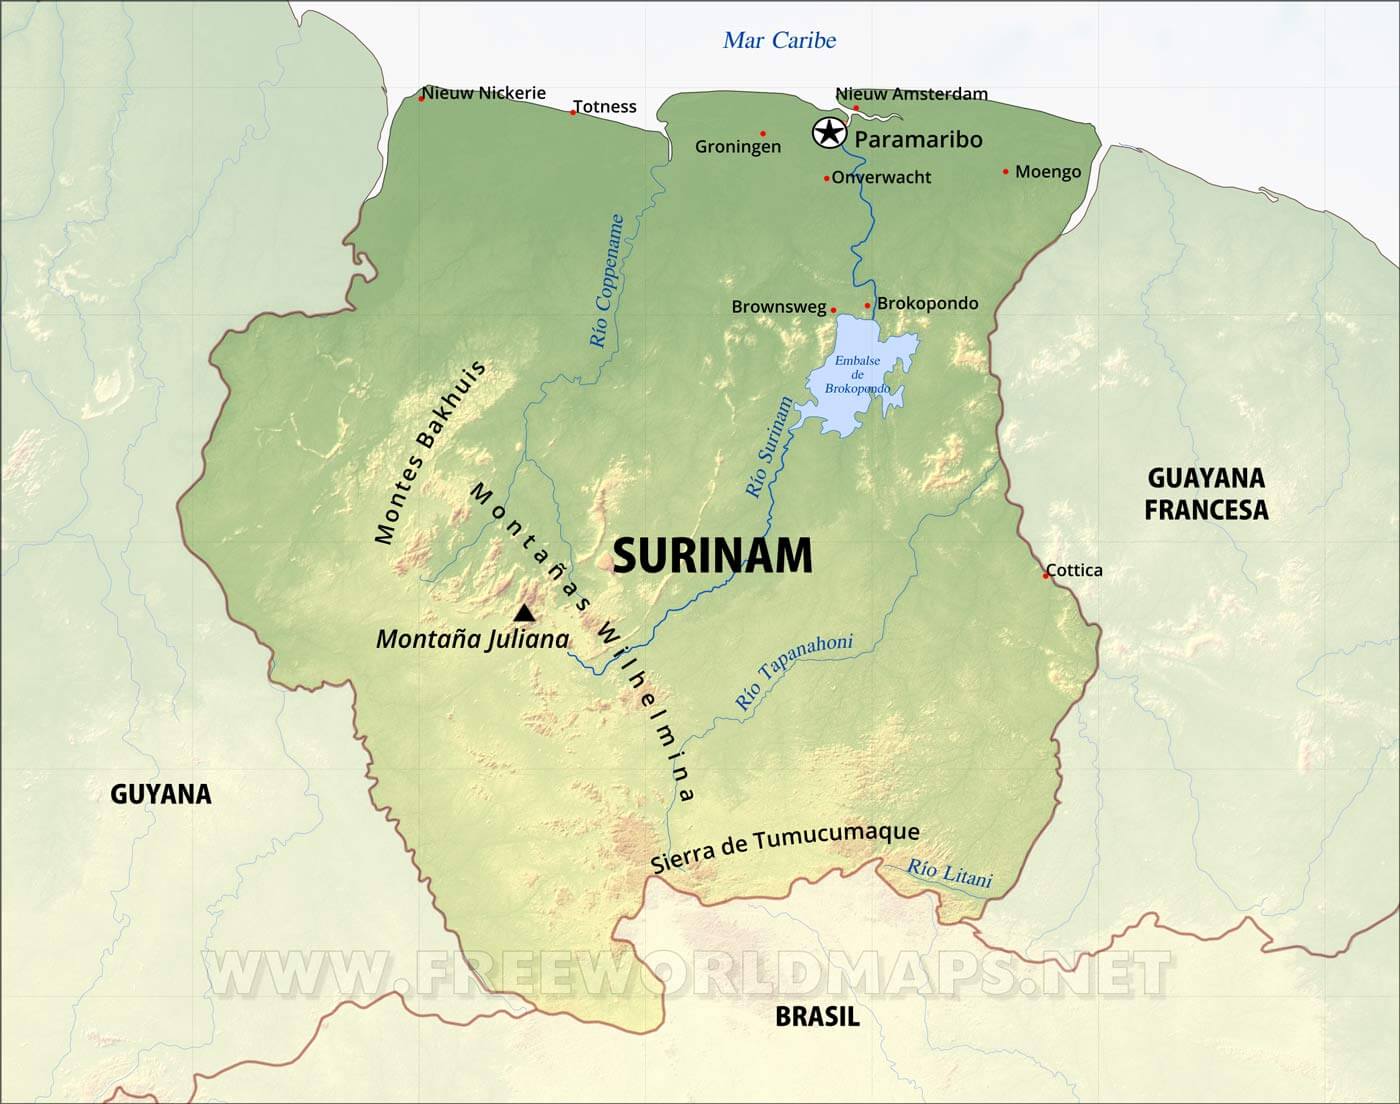 Surinam © Free world maps